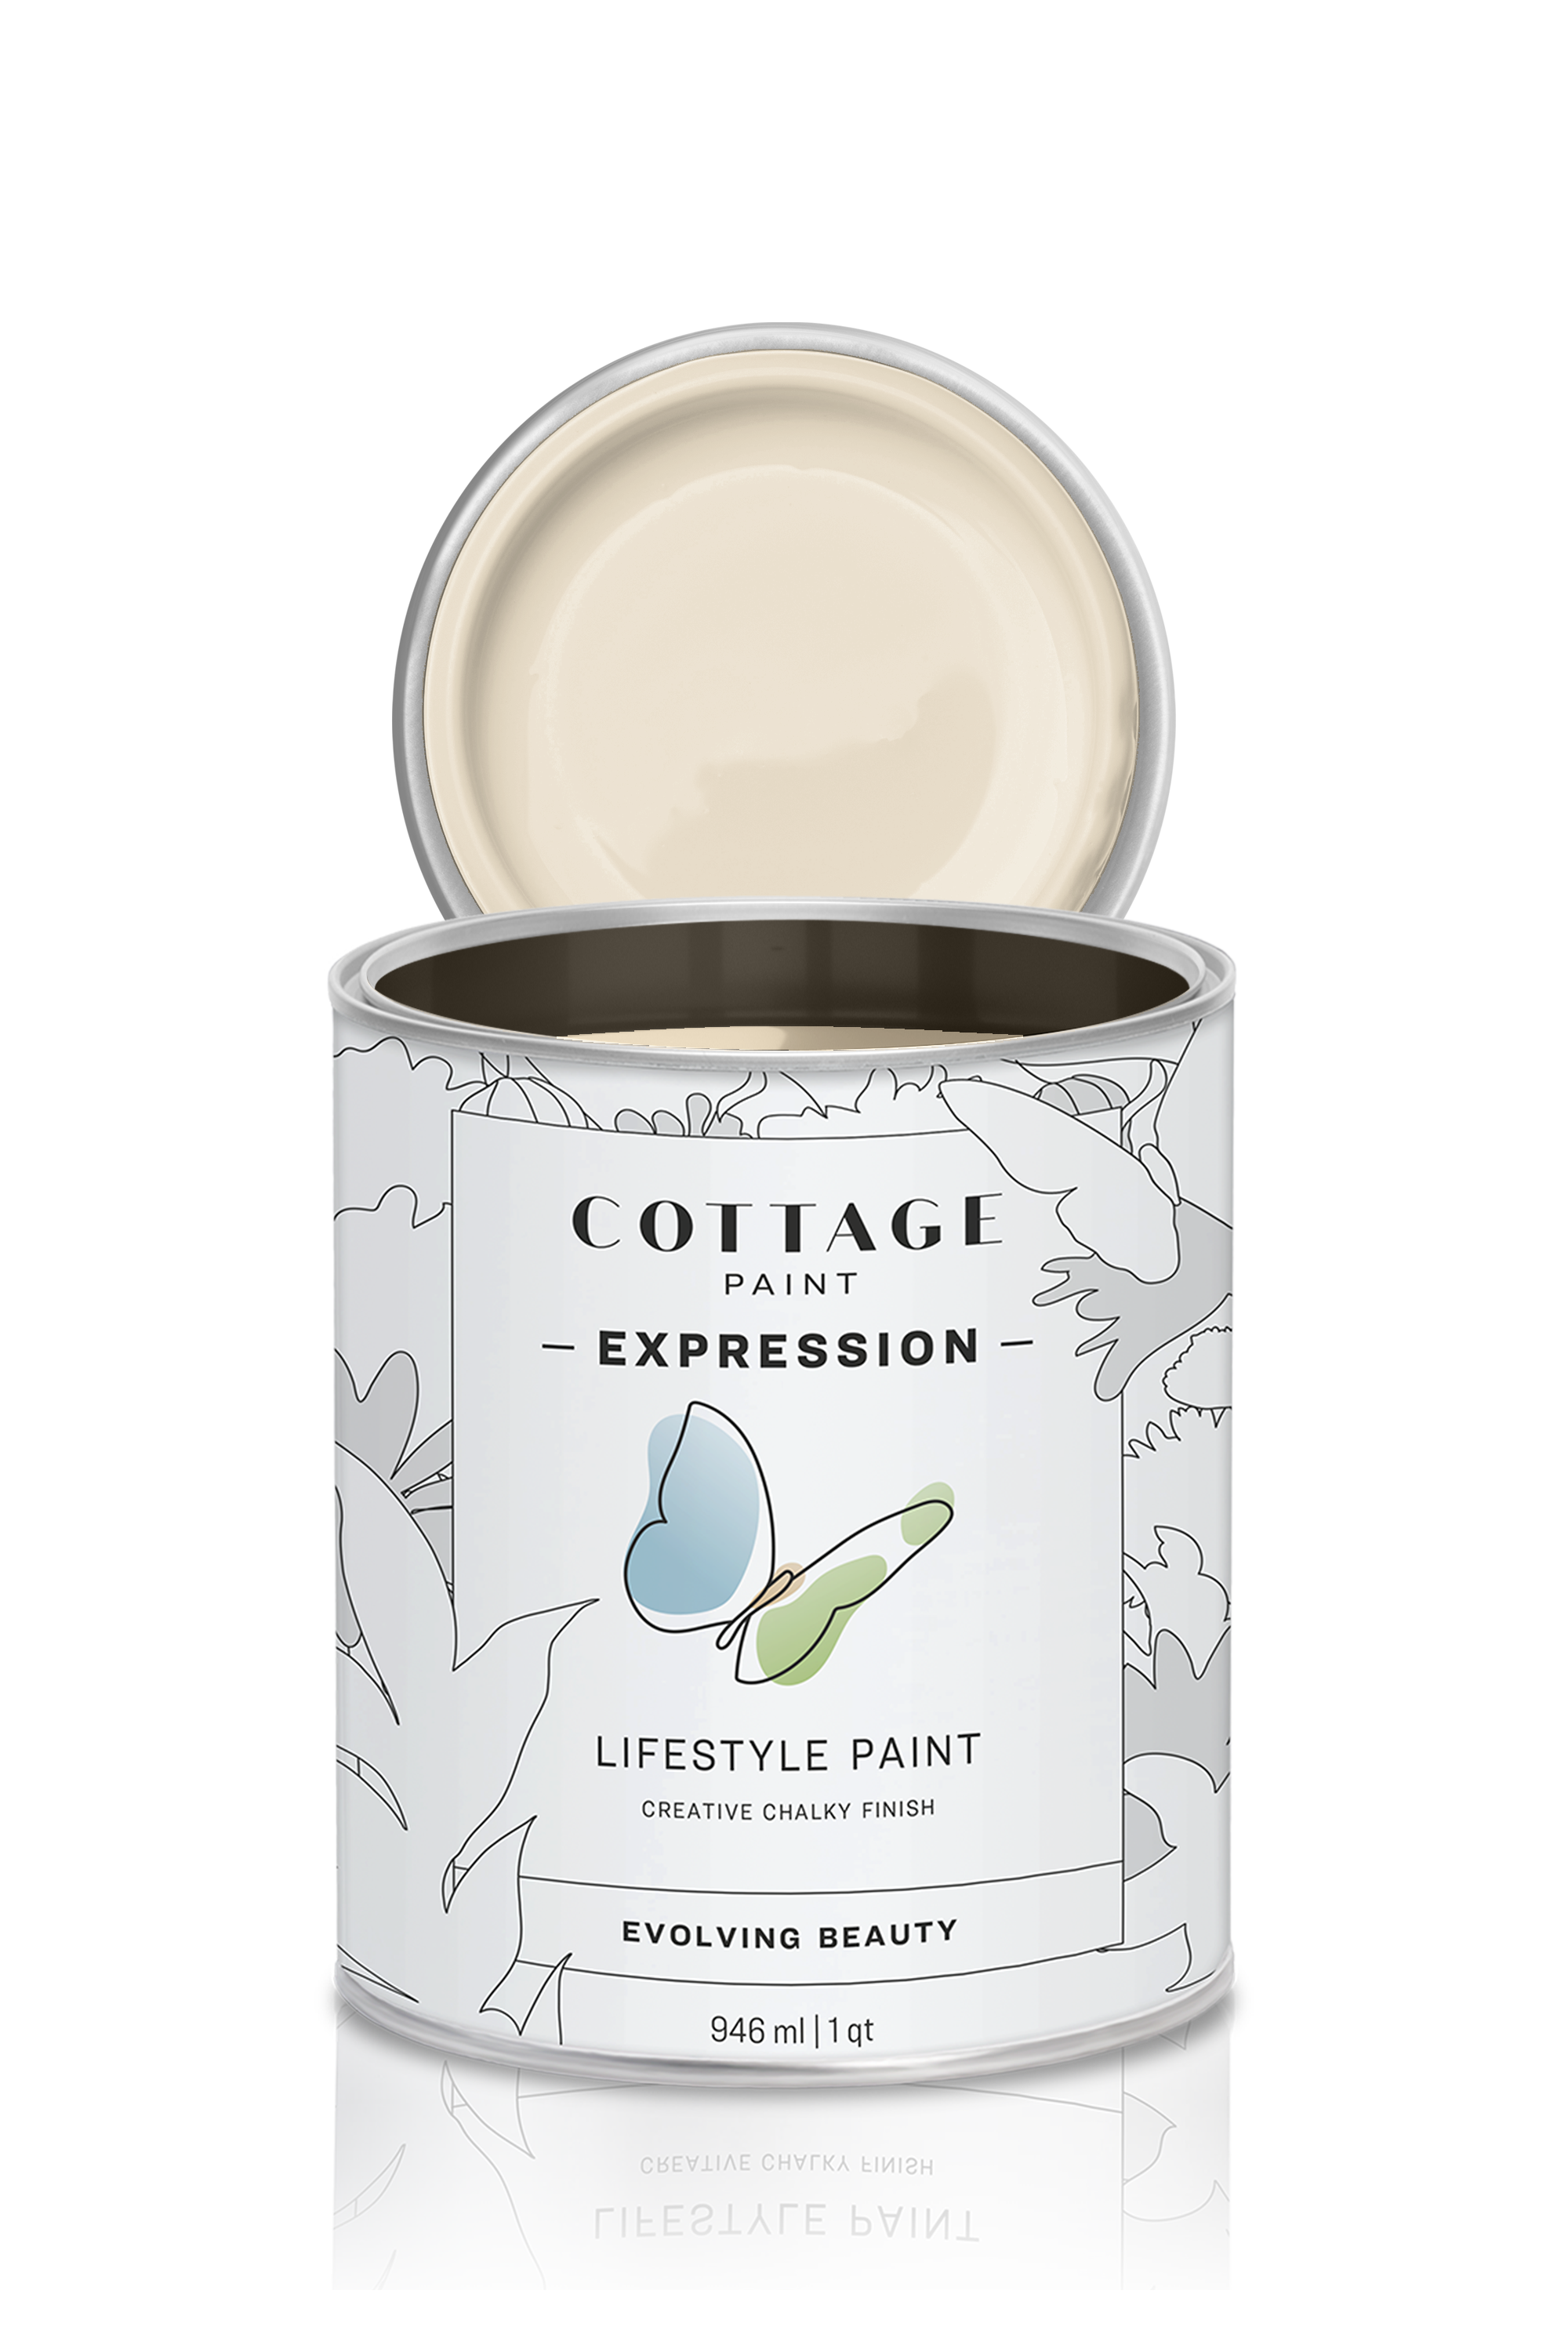 Whites & Cream tones, Expression Cottage Paint